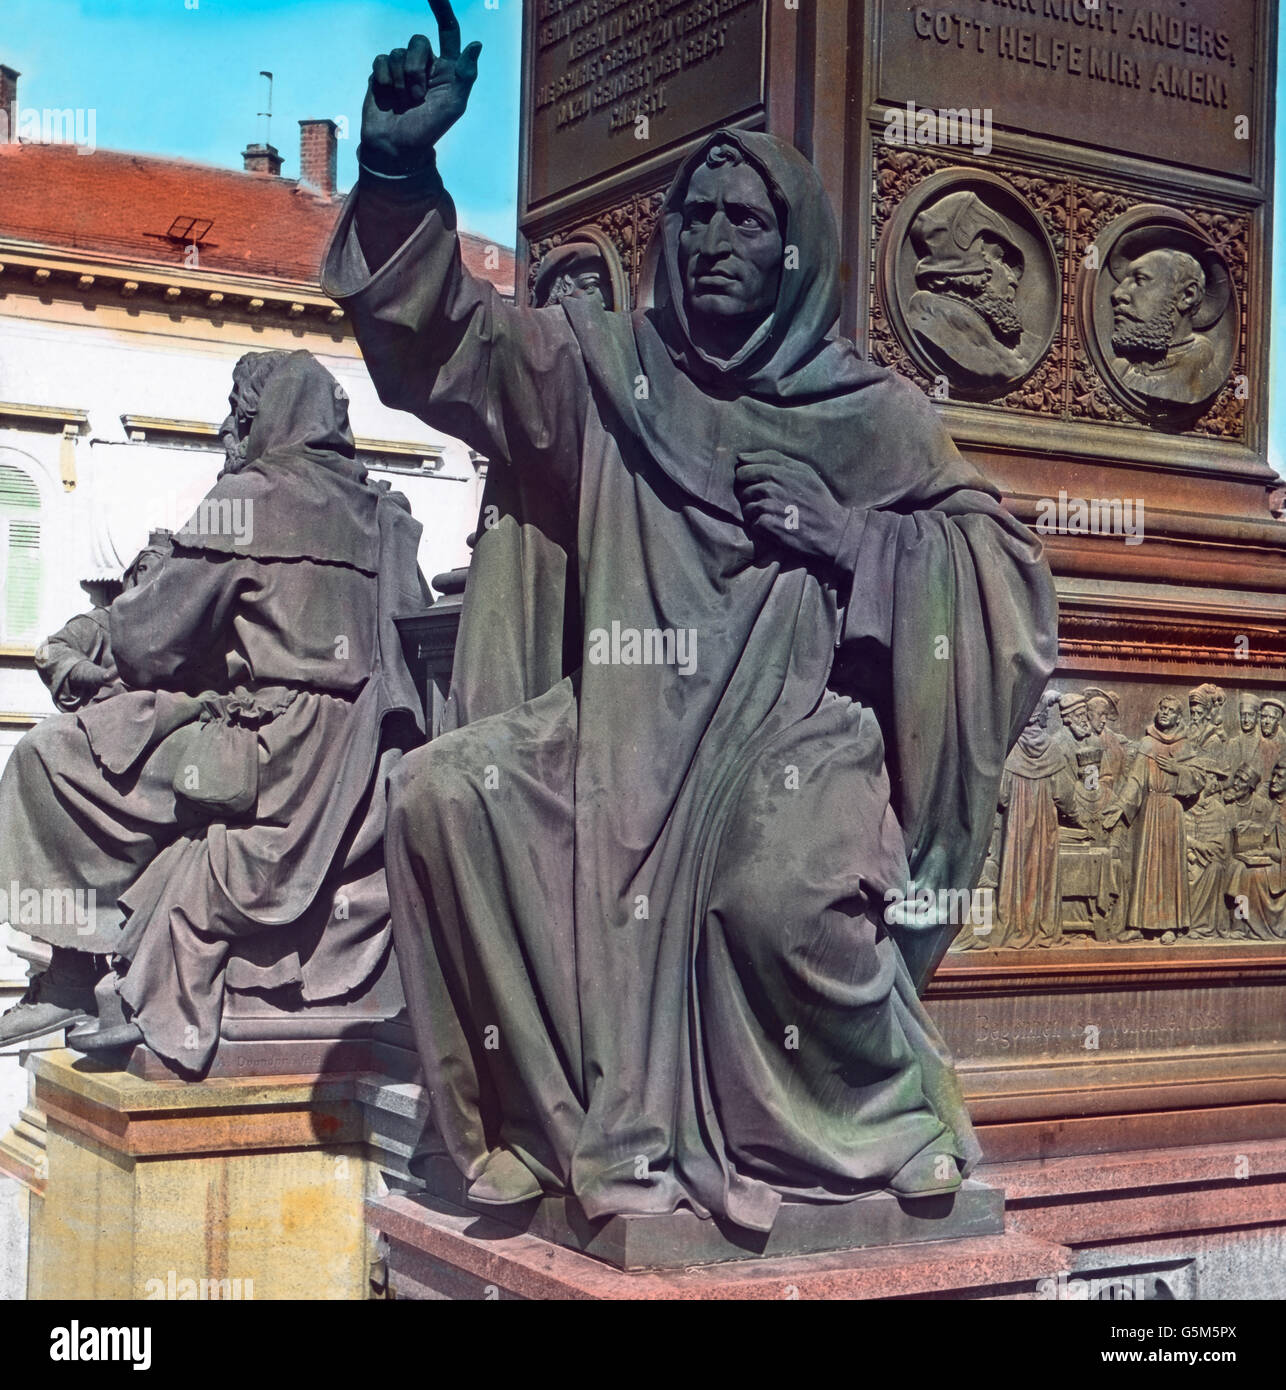 Szene aus dem Leben von Reformator Martin Luther. Scene from the life of Protestand reformer Martin Luther. Stock Photo